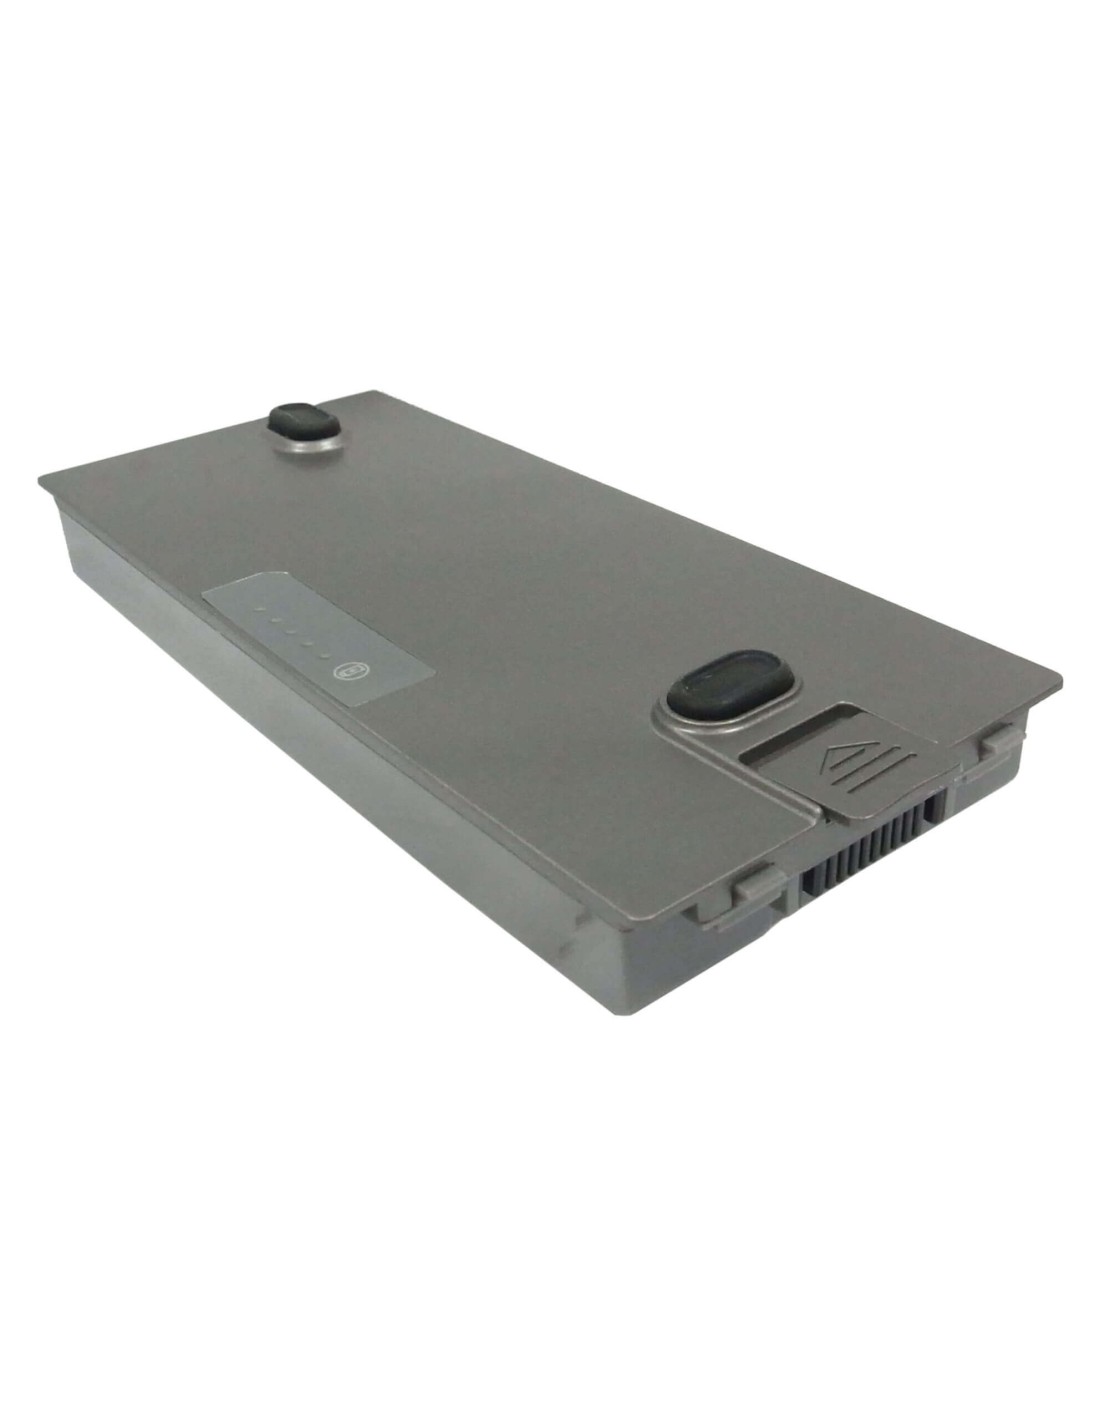 Metallic grey Battery for Dell Latitude D810, Precision M70 11.1V, 6600mAh - 73.26Wh